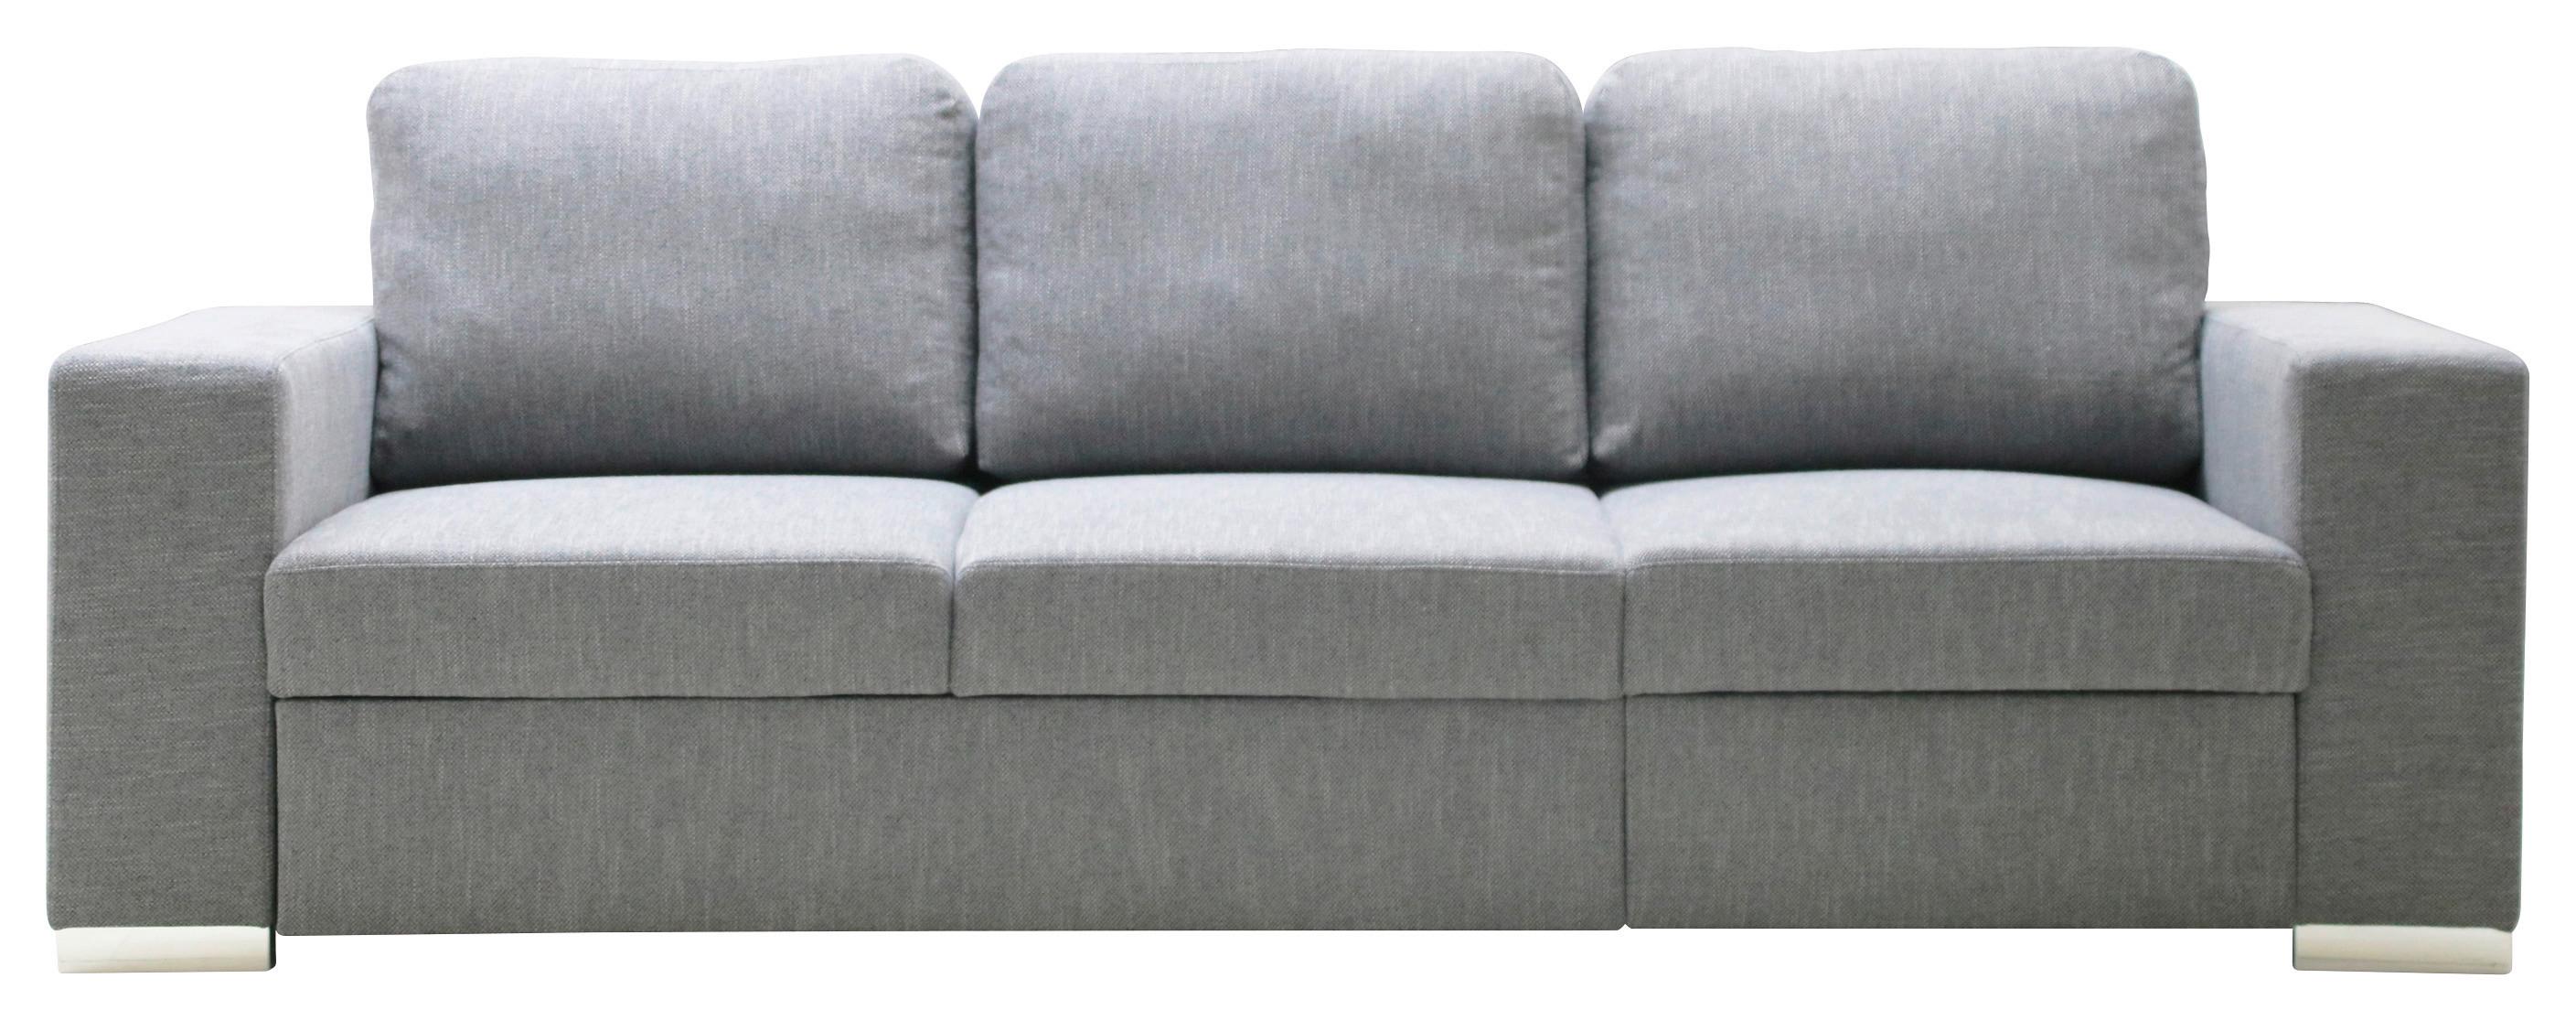 3-Sitzer-Sofa Mit Schlaffunktion Stone Grau - Schwarz/Grau, Basics, Holz/Holzwerkstoff (233/66/88/83/147cm) - P & B